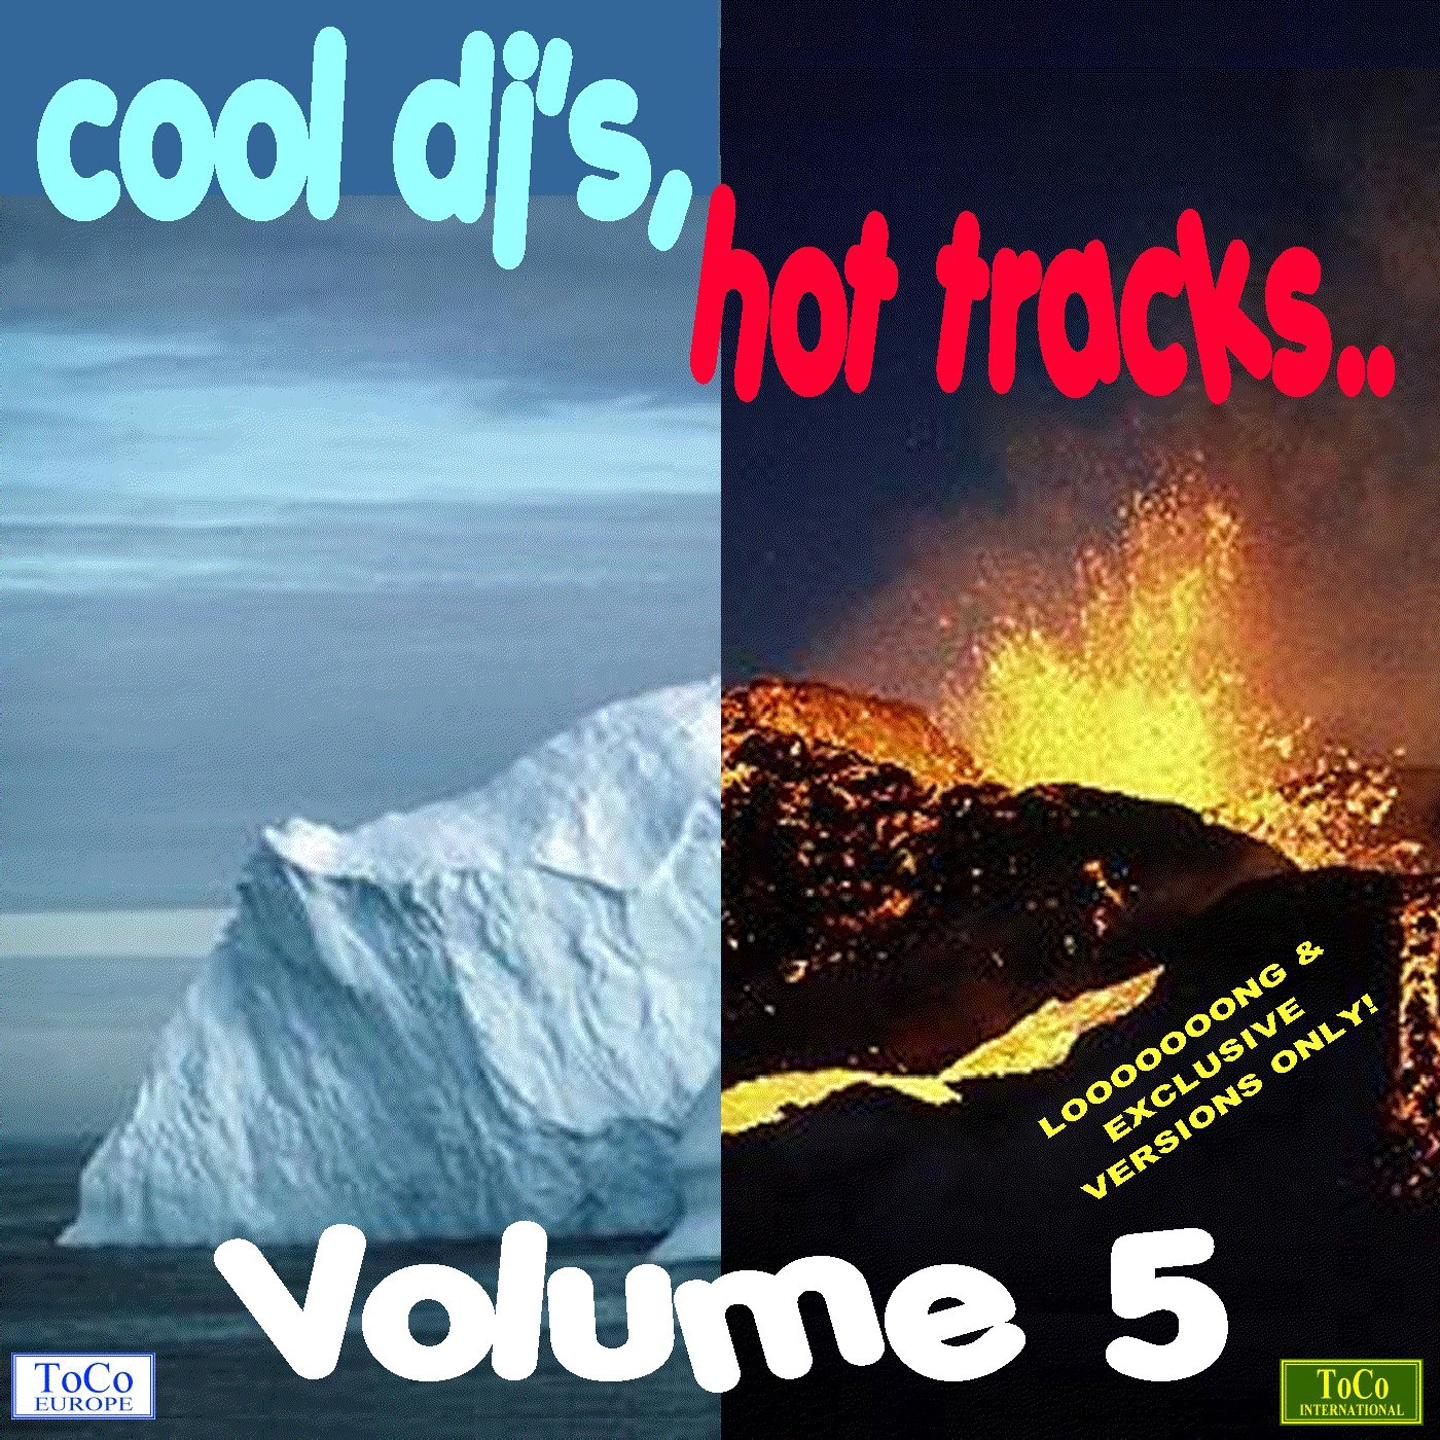 Cool dj's, hot tracks - vol. 5